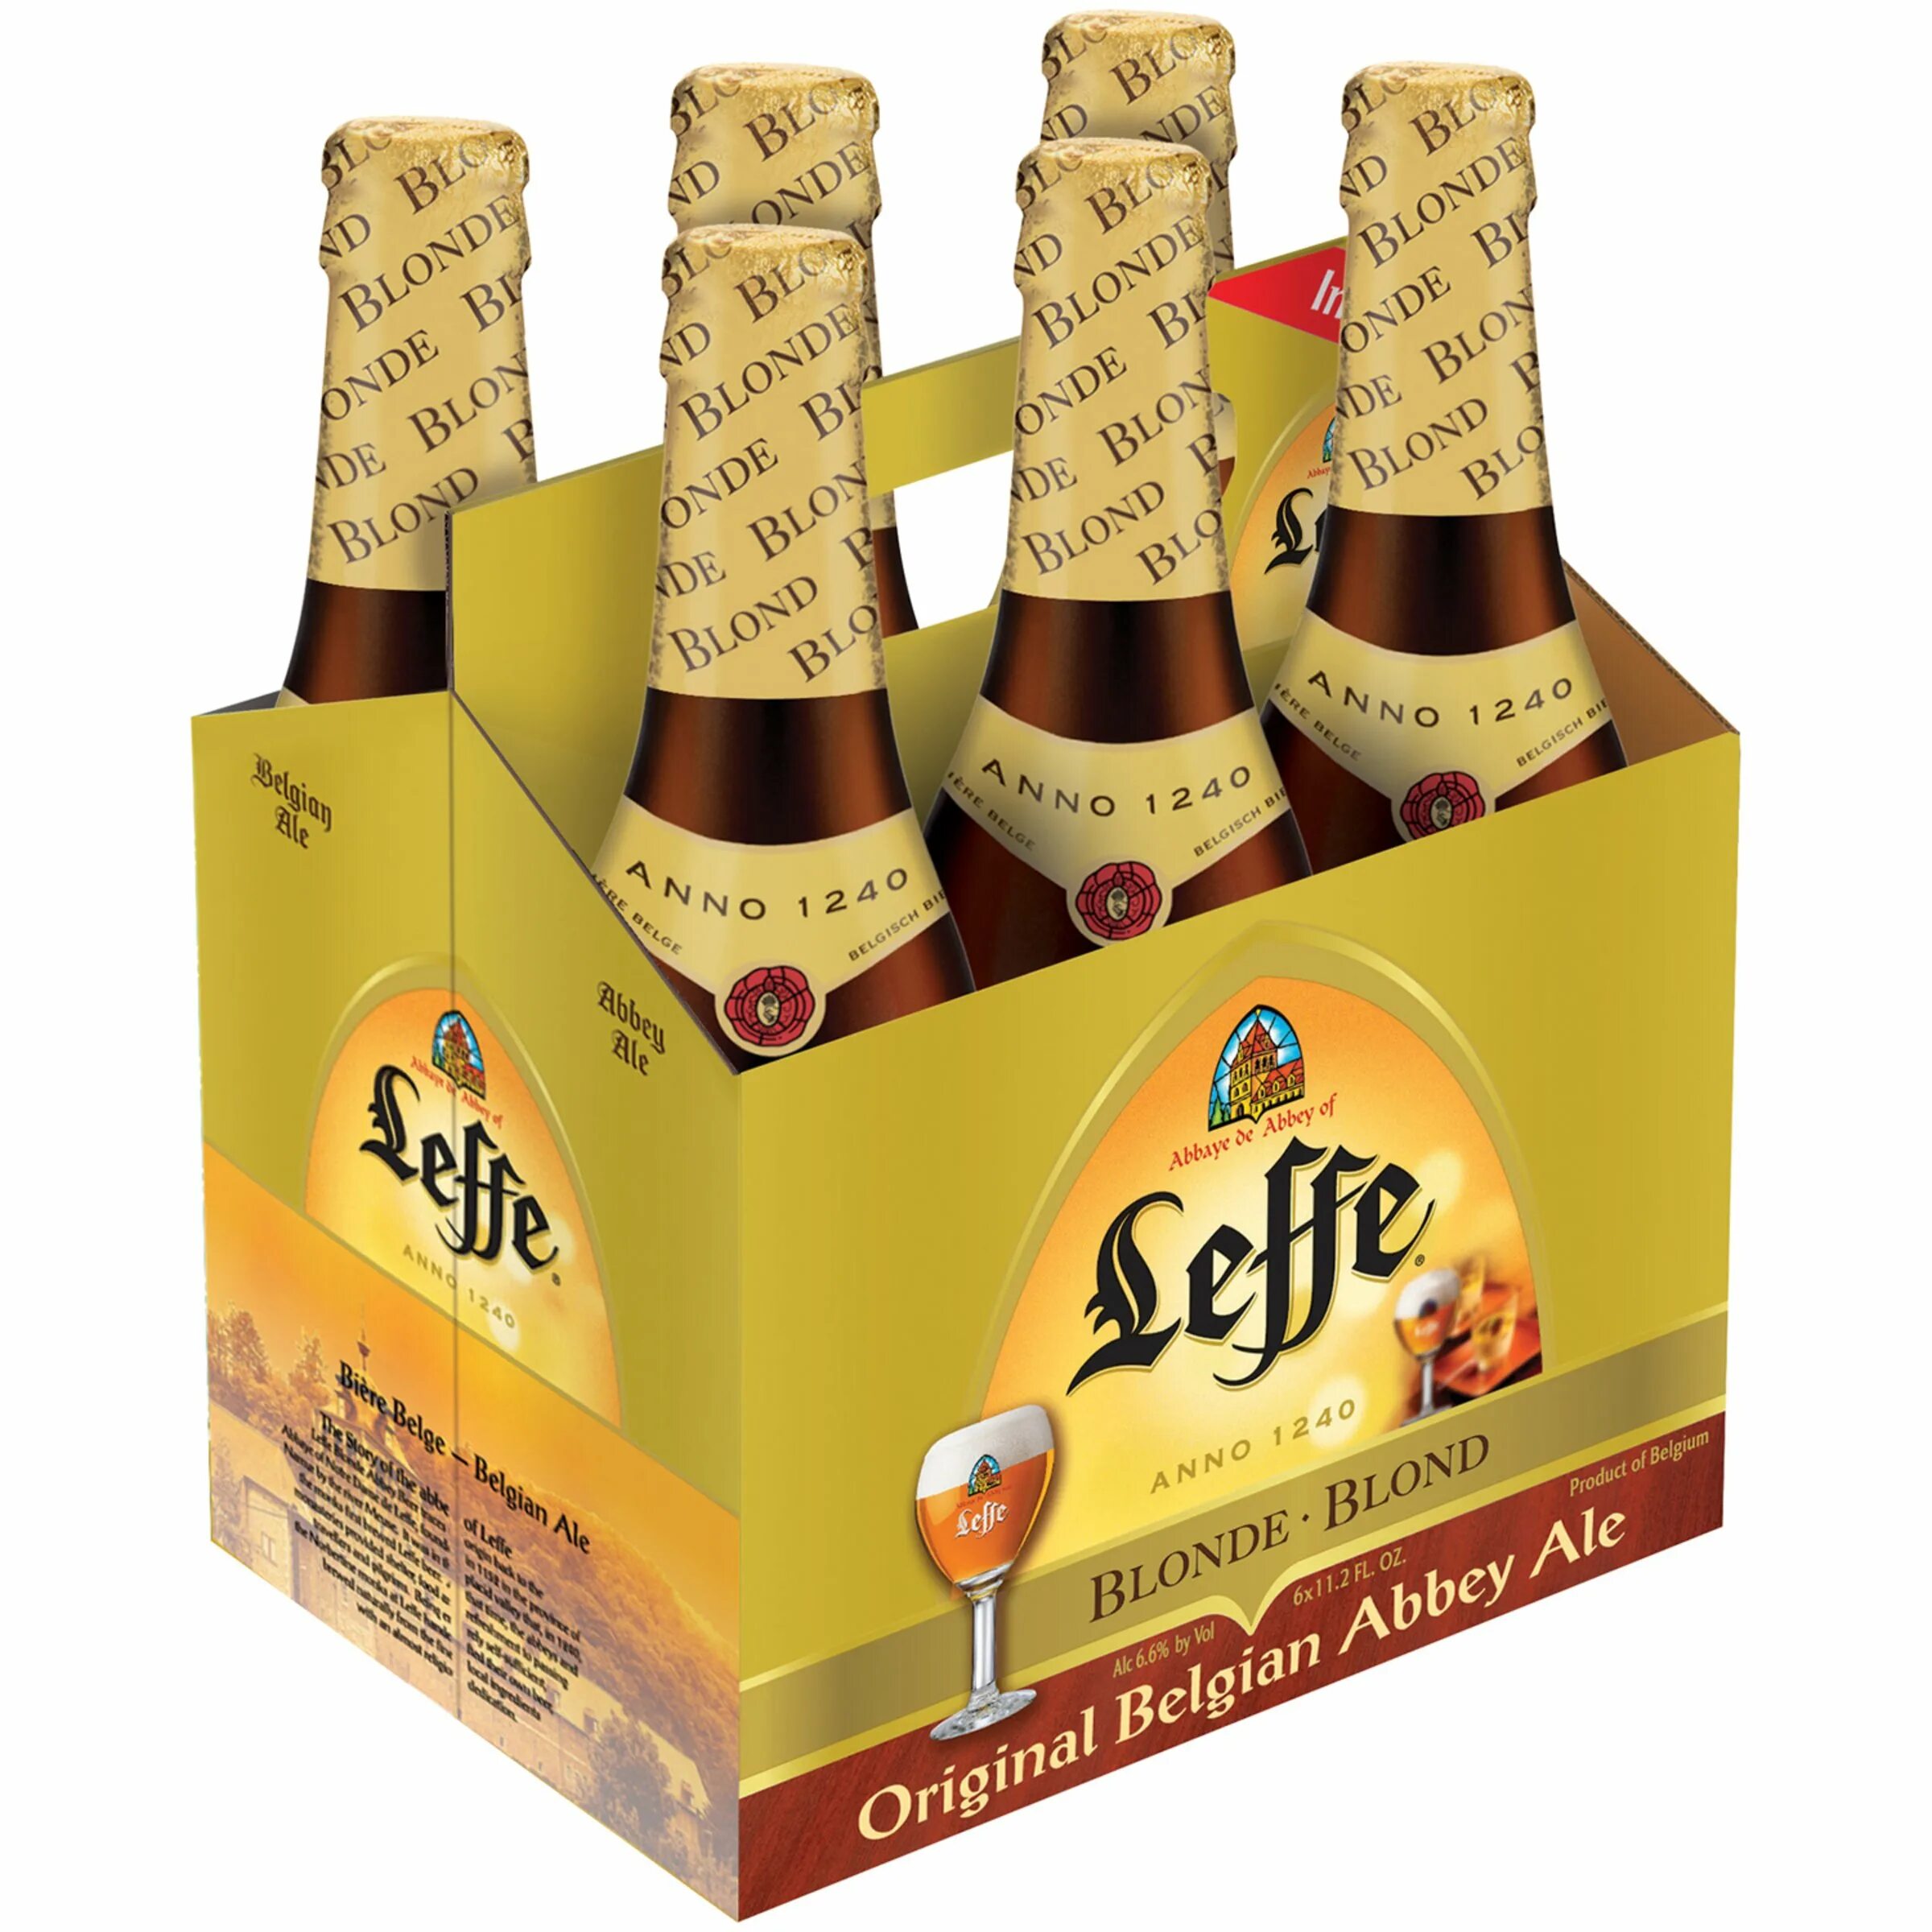 Leffe blonde. Пиво Leffe blonde. Бельгийское пиво Леффе. Напиток Леффе блонд. Бельгийское пиво Leffe.